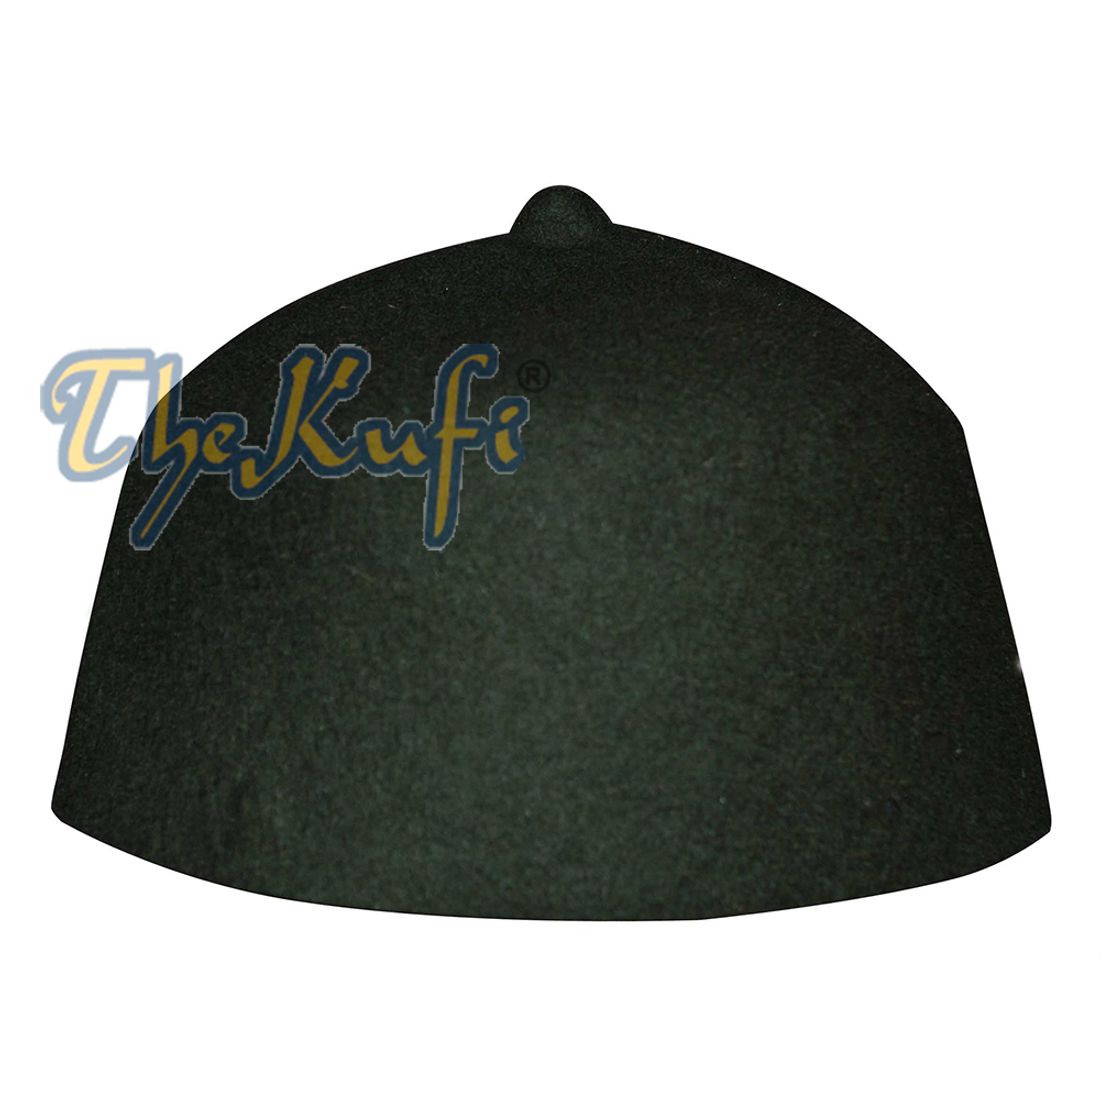 Dark Army Green Felt Wool Fez Hat with Tip